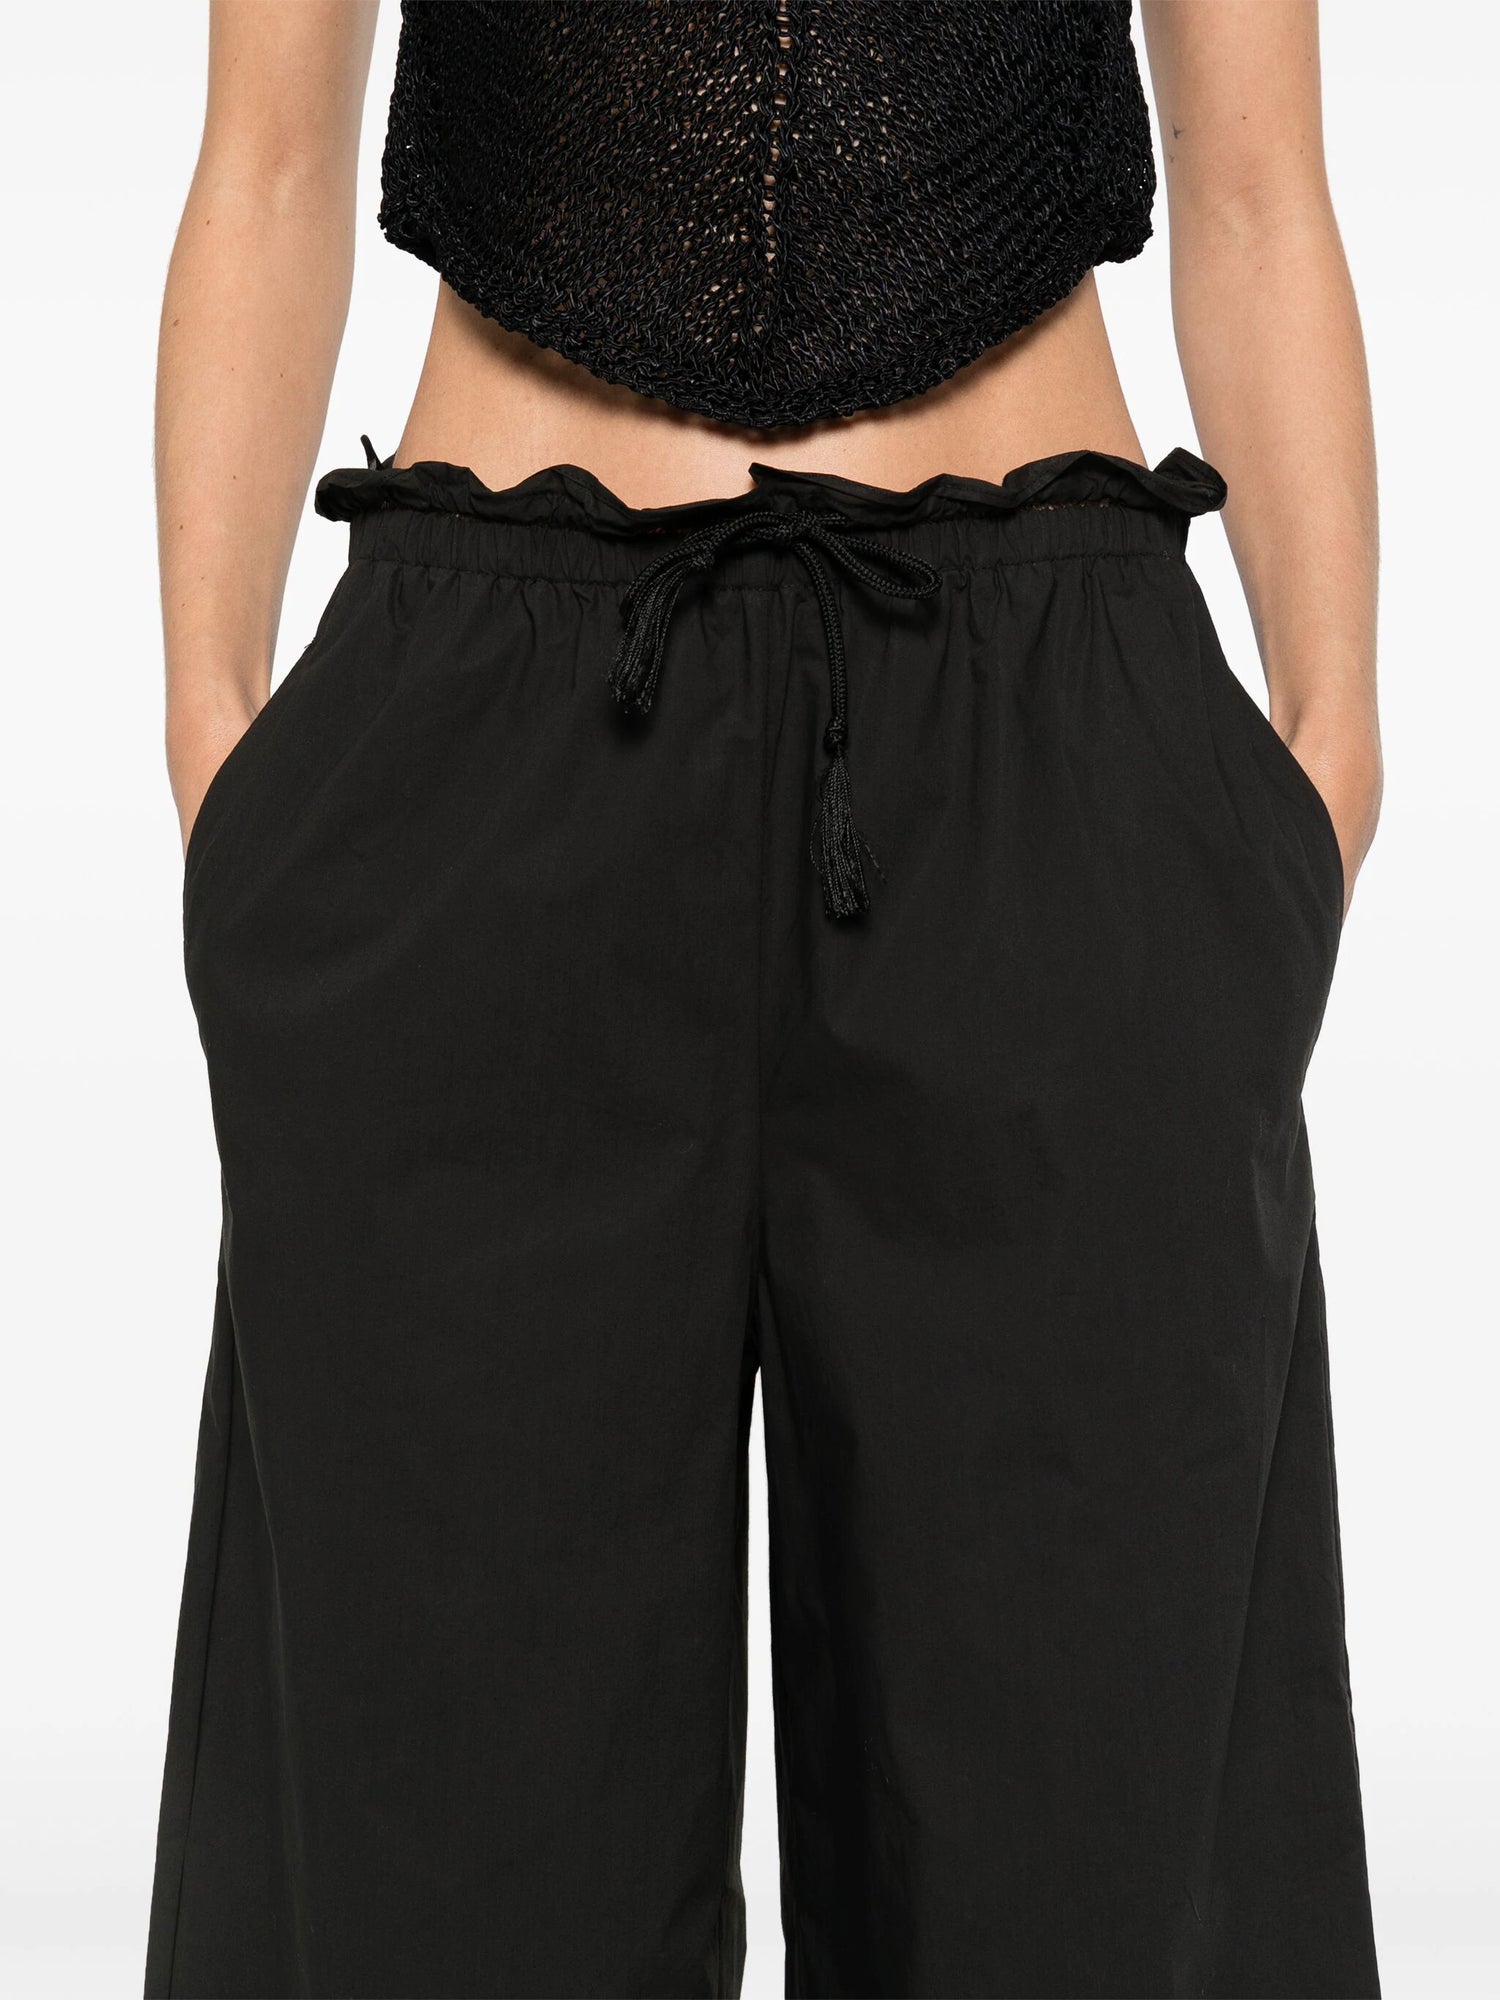 Cotton popline elasticated pants, black